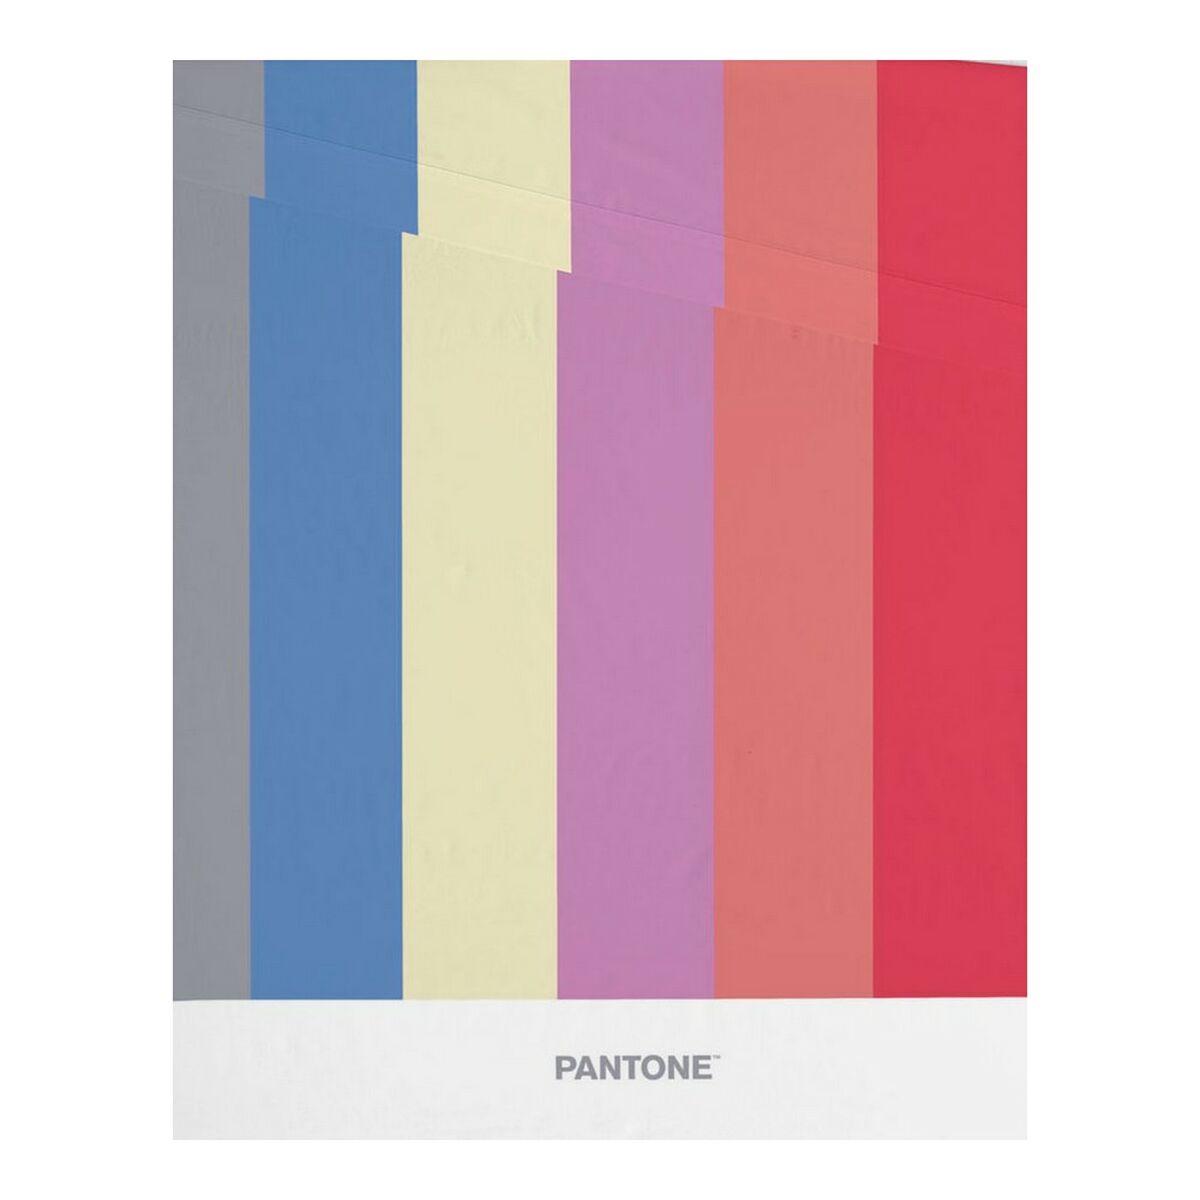 Oberlaken Pantone Stripes (160 x 270 cm) (Einzelmatratze)